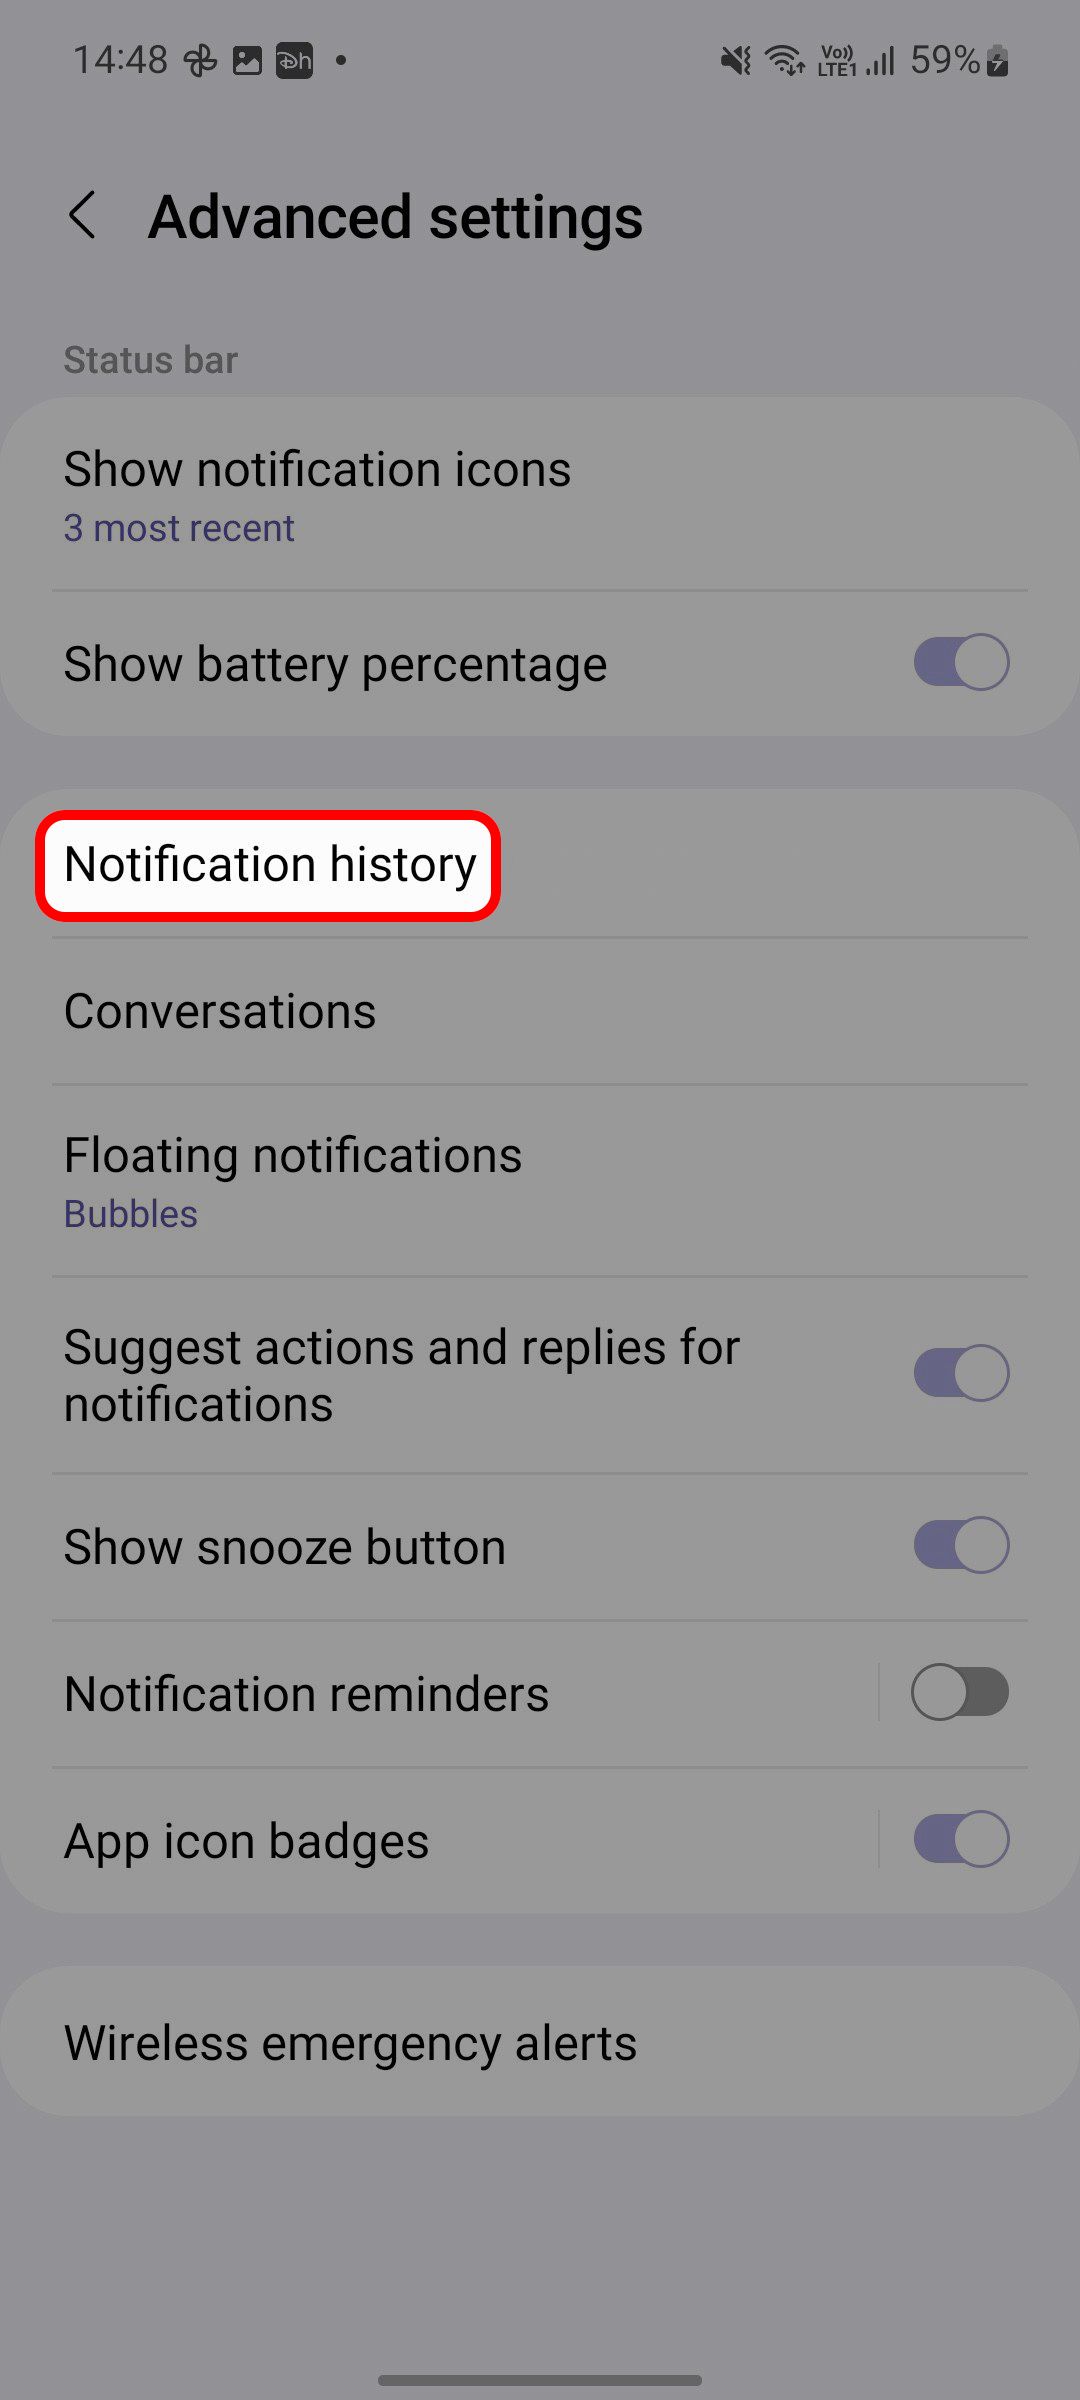 Samsung One UI Notifications Advanced settings menu highlighting the Notification history option